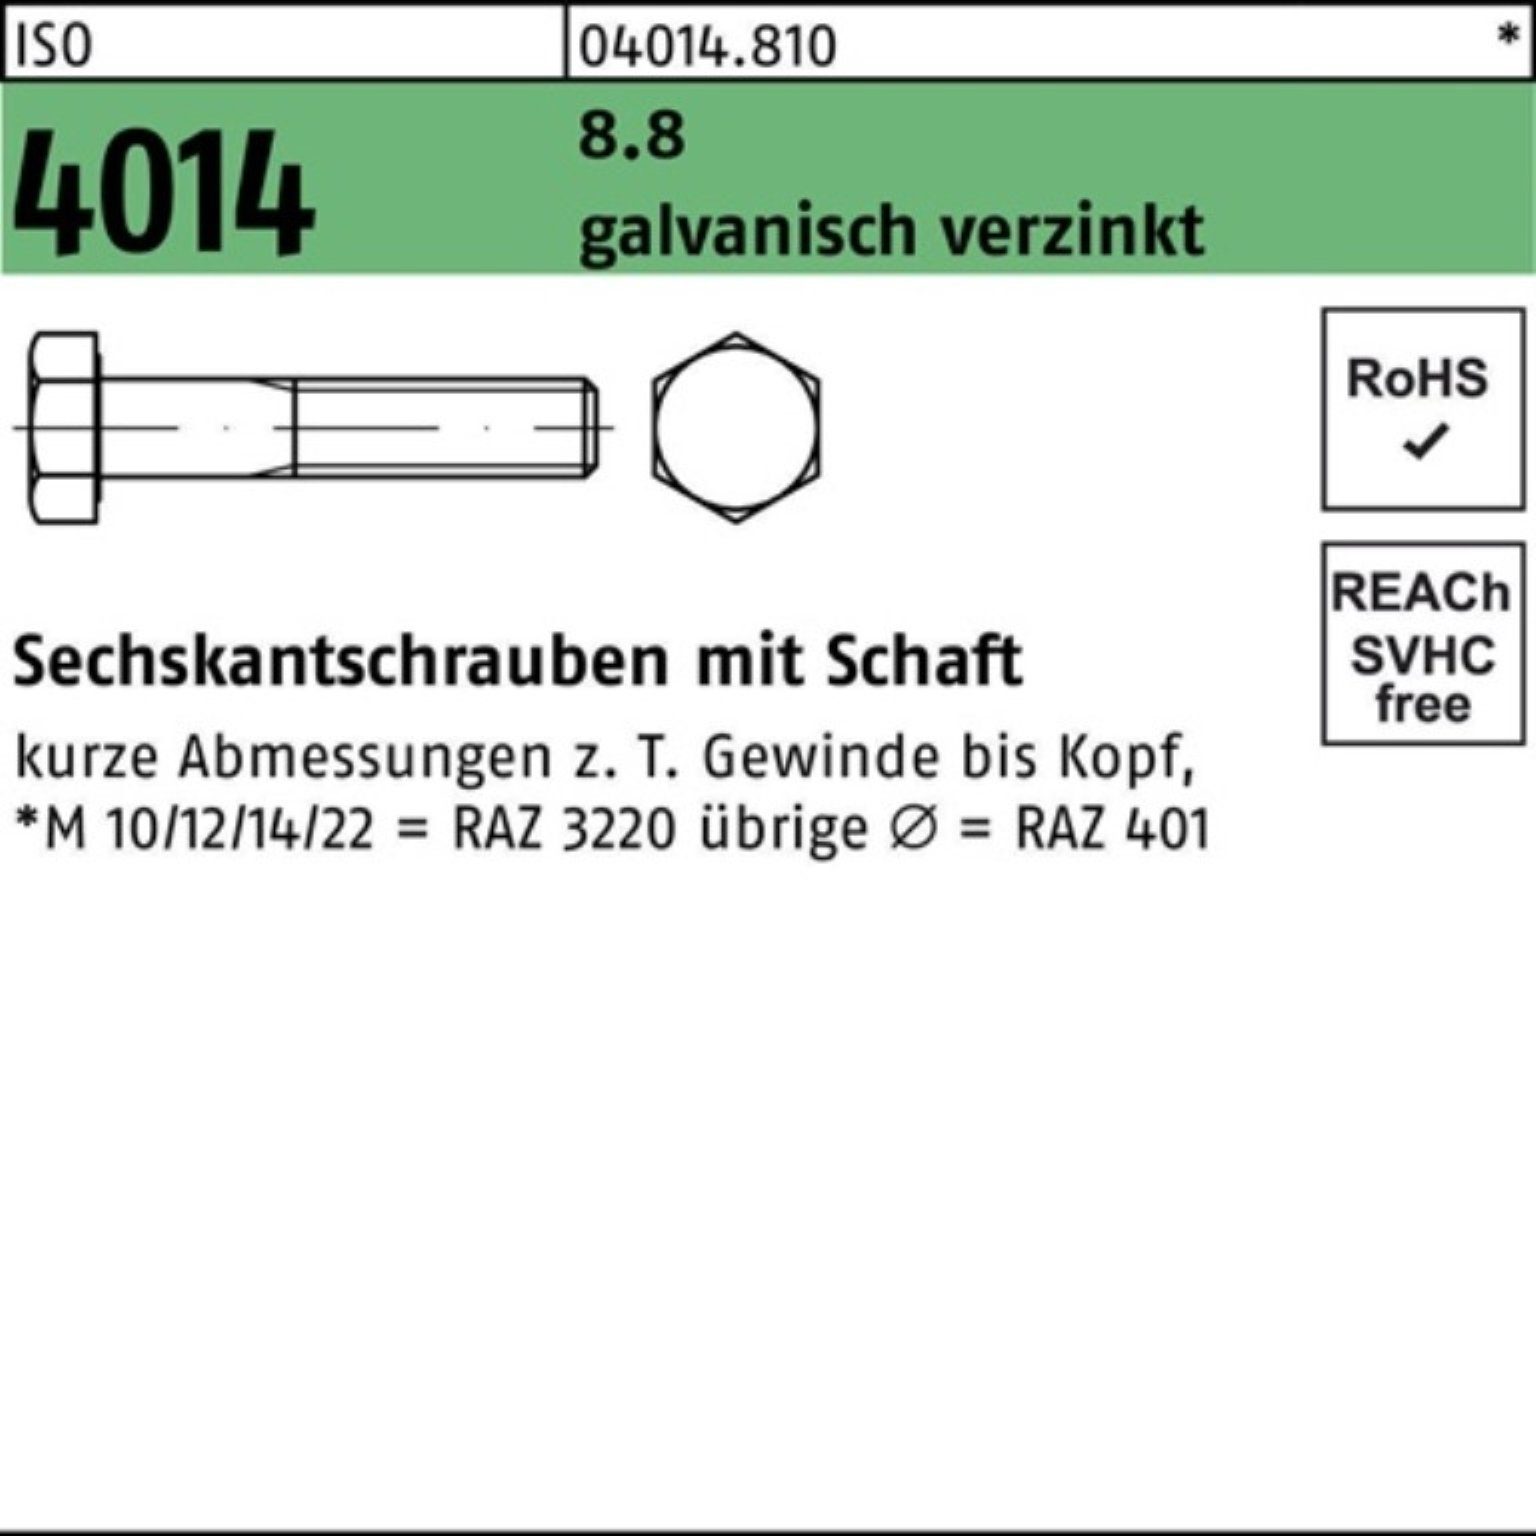 Bufab Sechskantschraube 100er Pack Sechskantschraube ISO 4014 Schaft M22x 200 8.8 galv.verz. 1 | Schrauben